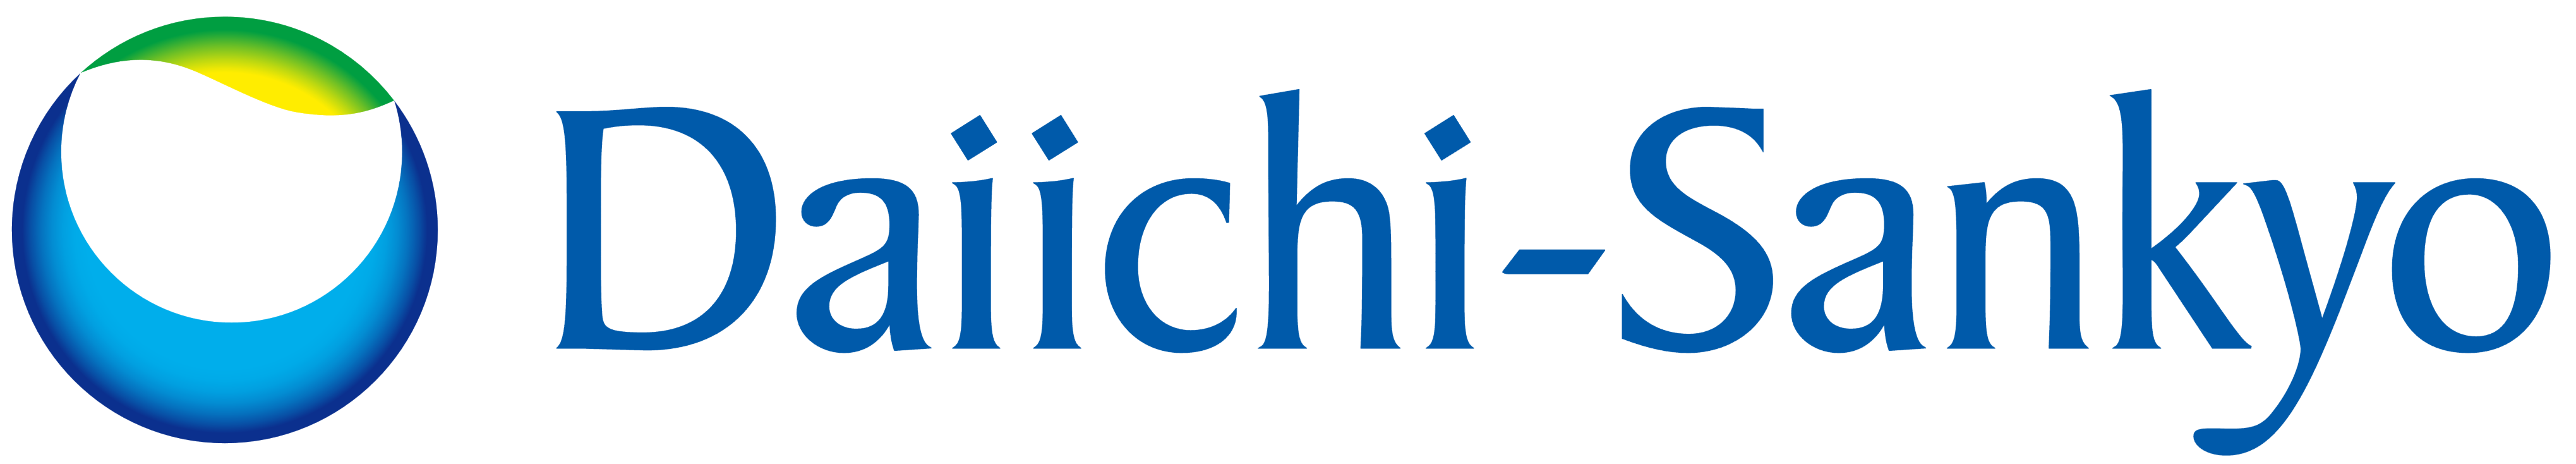 Daiichi Sankyo - Descărcare logo-uri